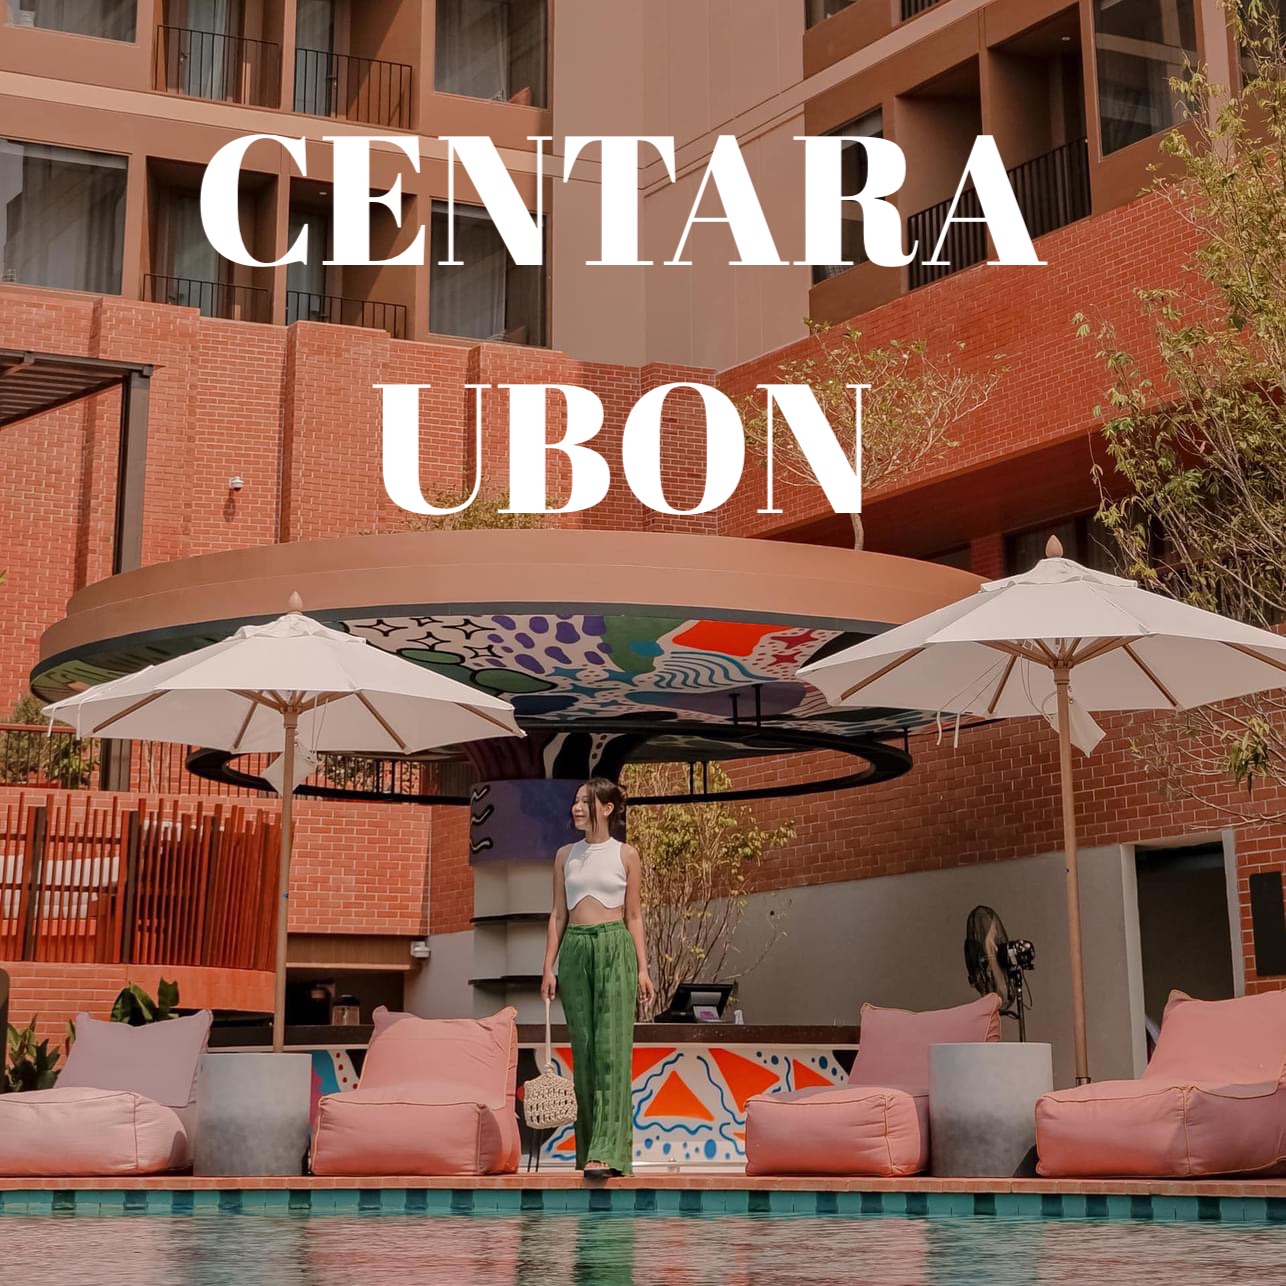 Centara Ubon 酒店新开业,非常漂亮。